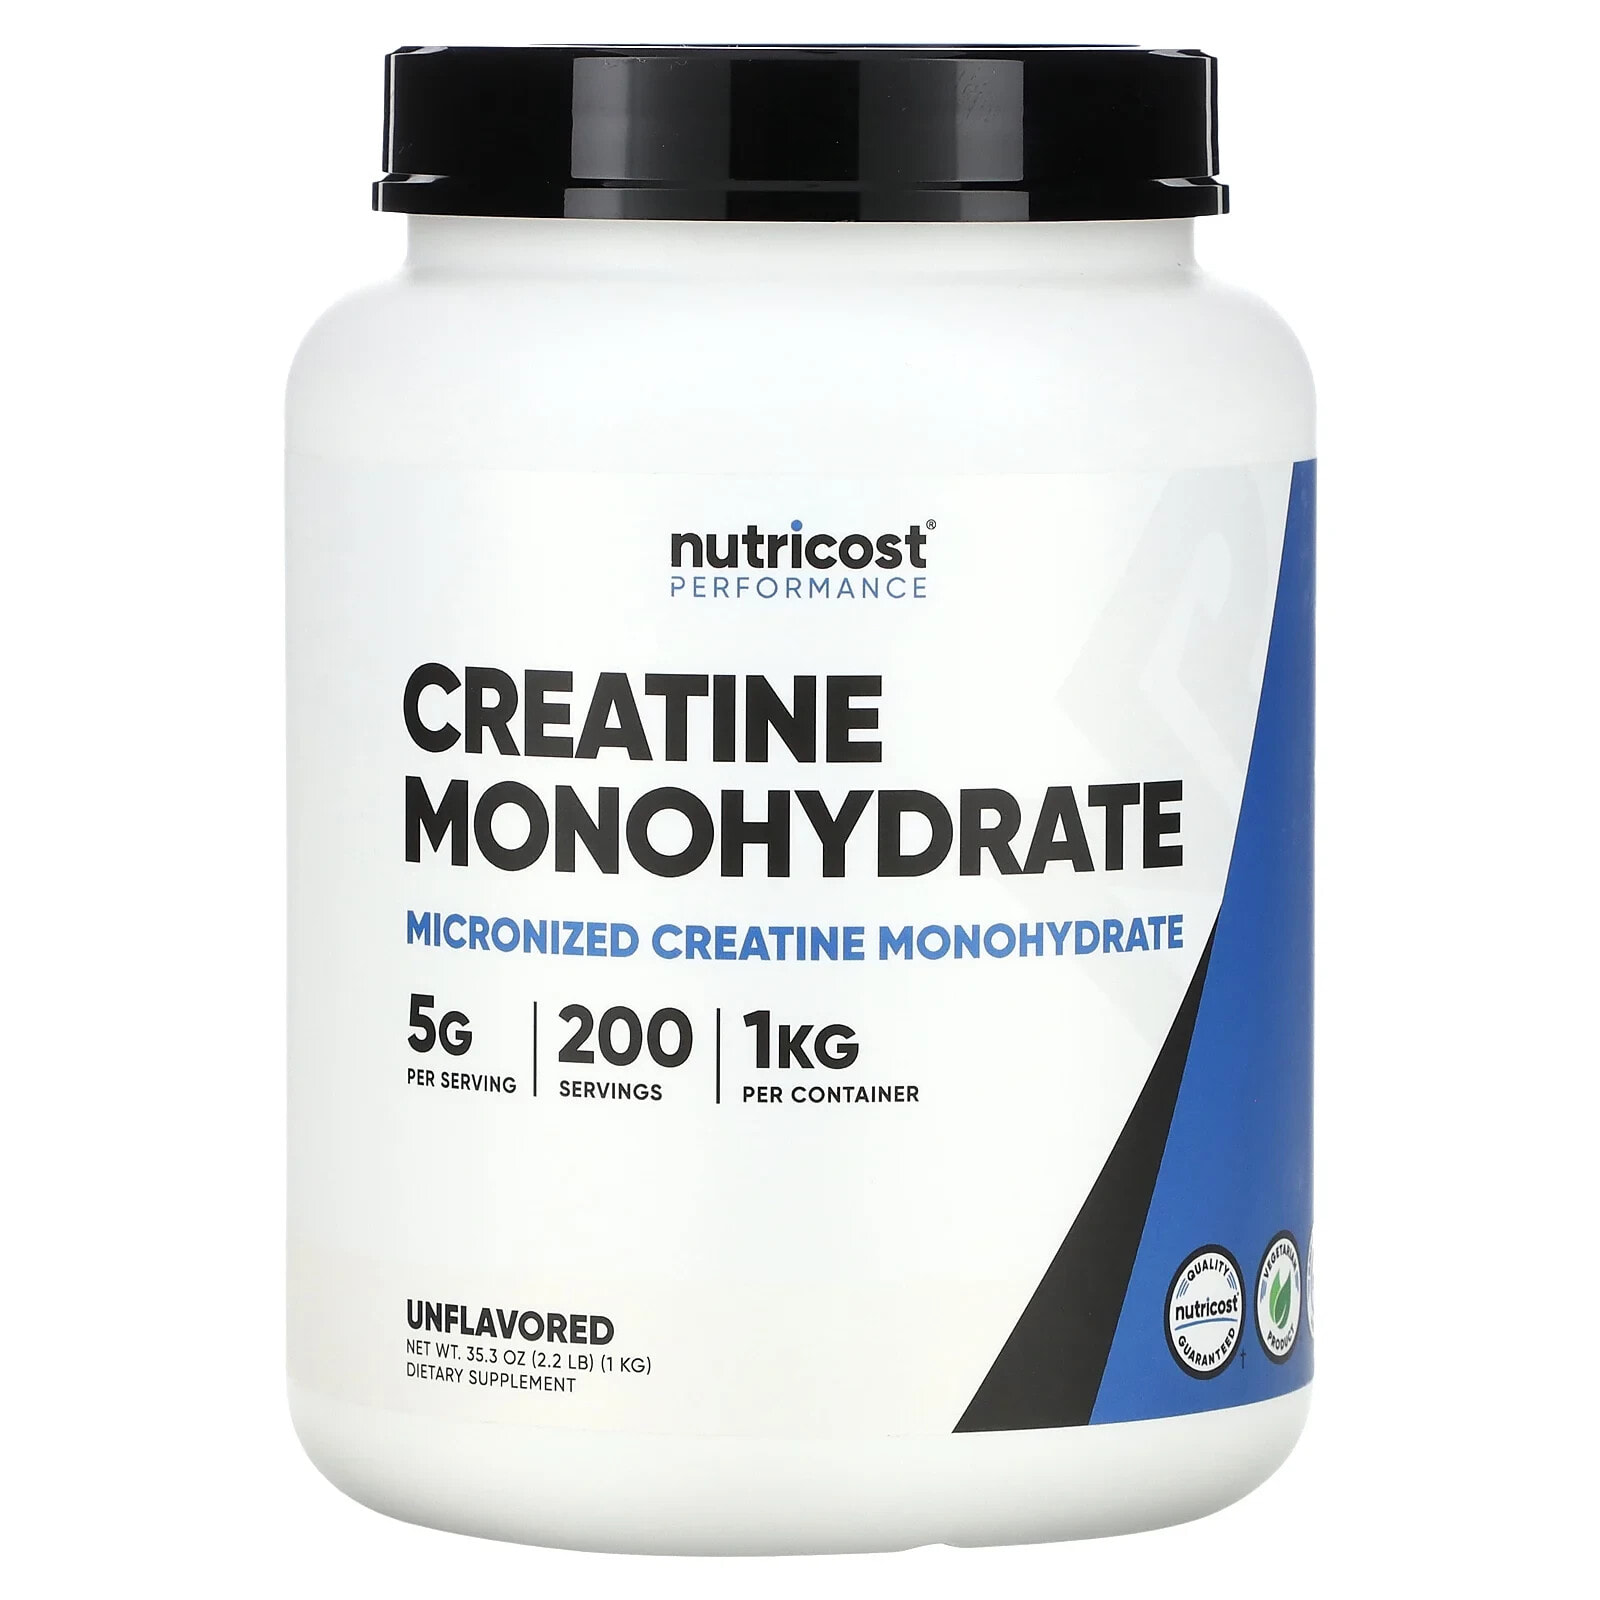 Nutricost, Performance, Creatine Monohydrate, Blue Raspberry, 1.1 lb (500 g)